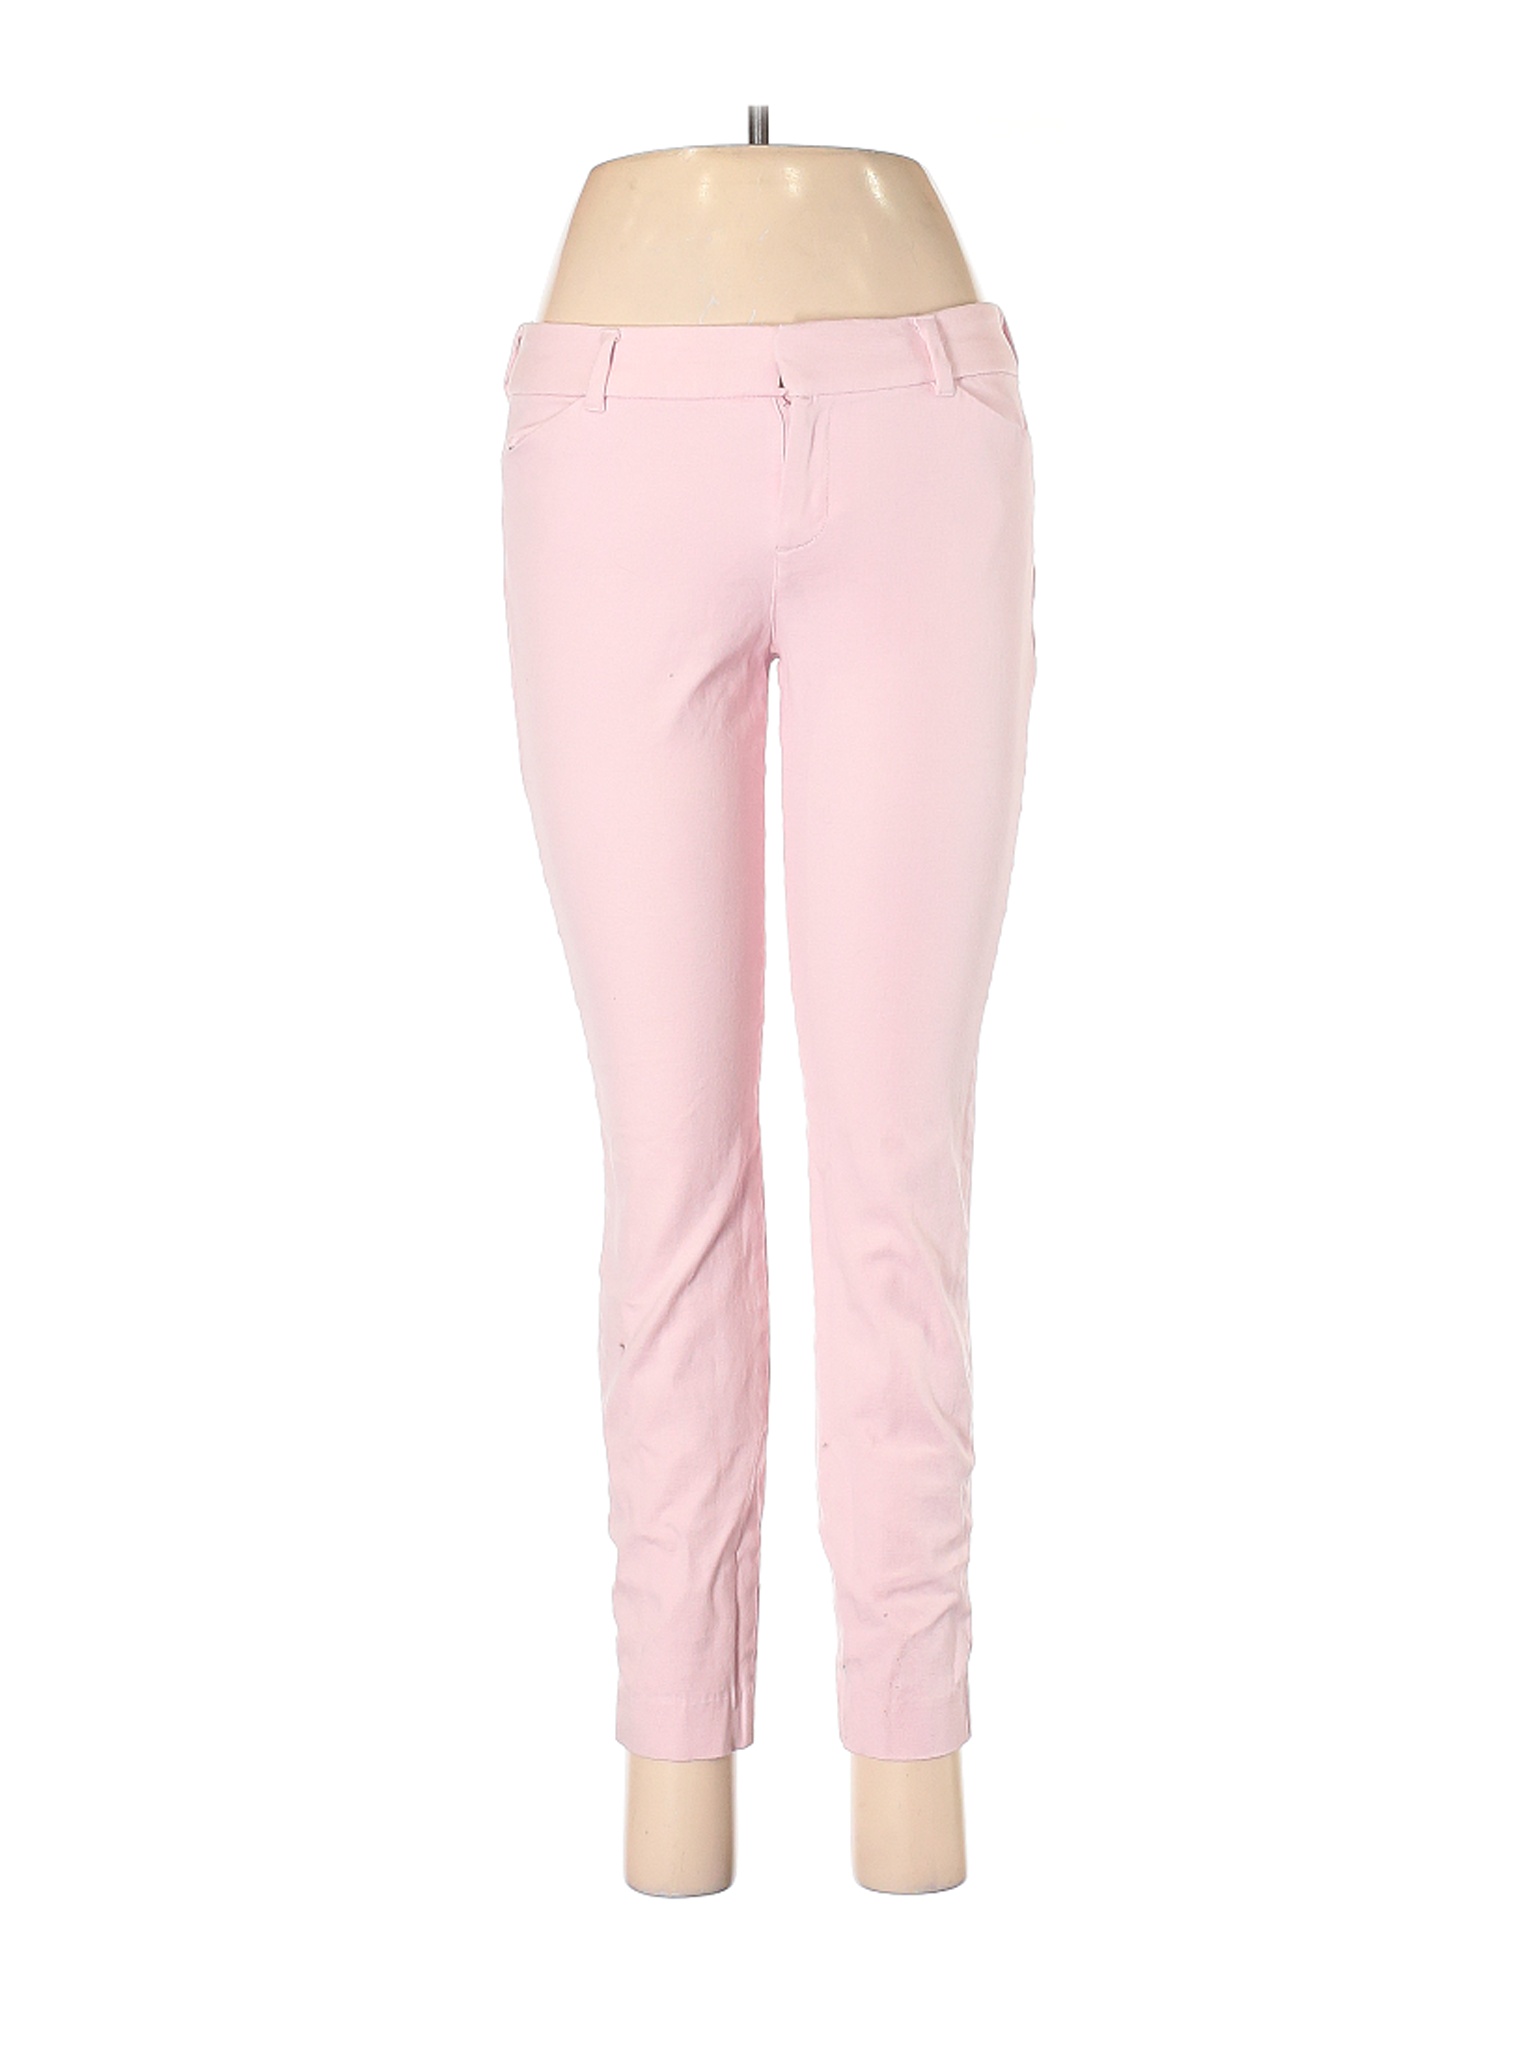 Talbots Women Pink Dress Pants 6 Petites | eBay